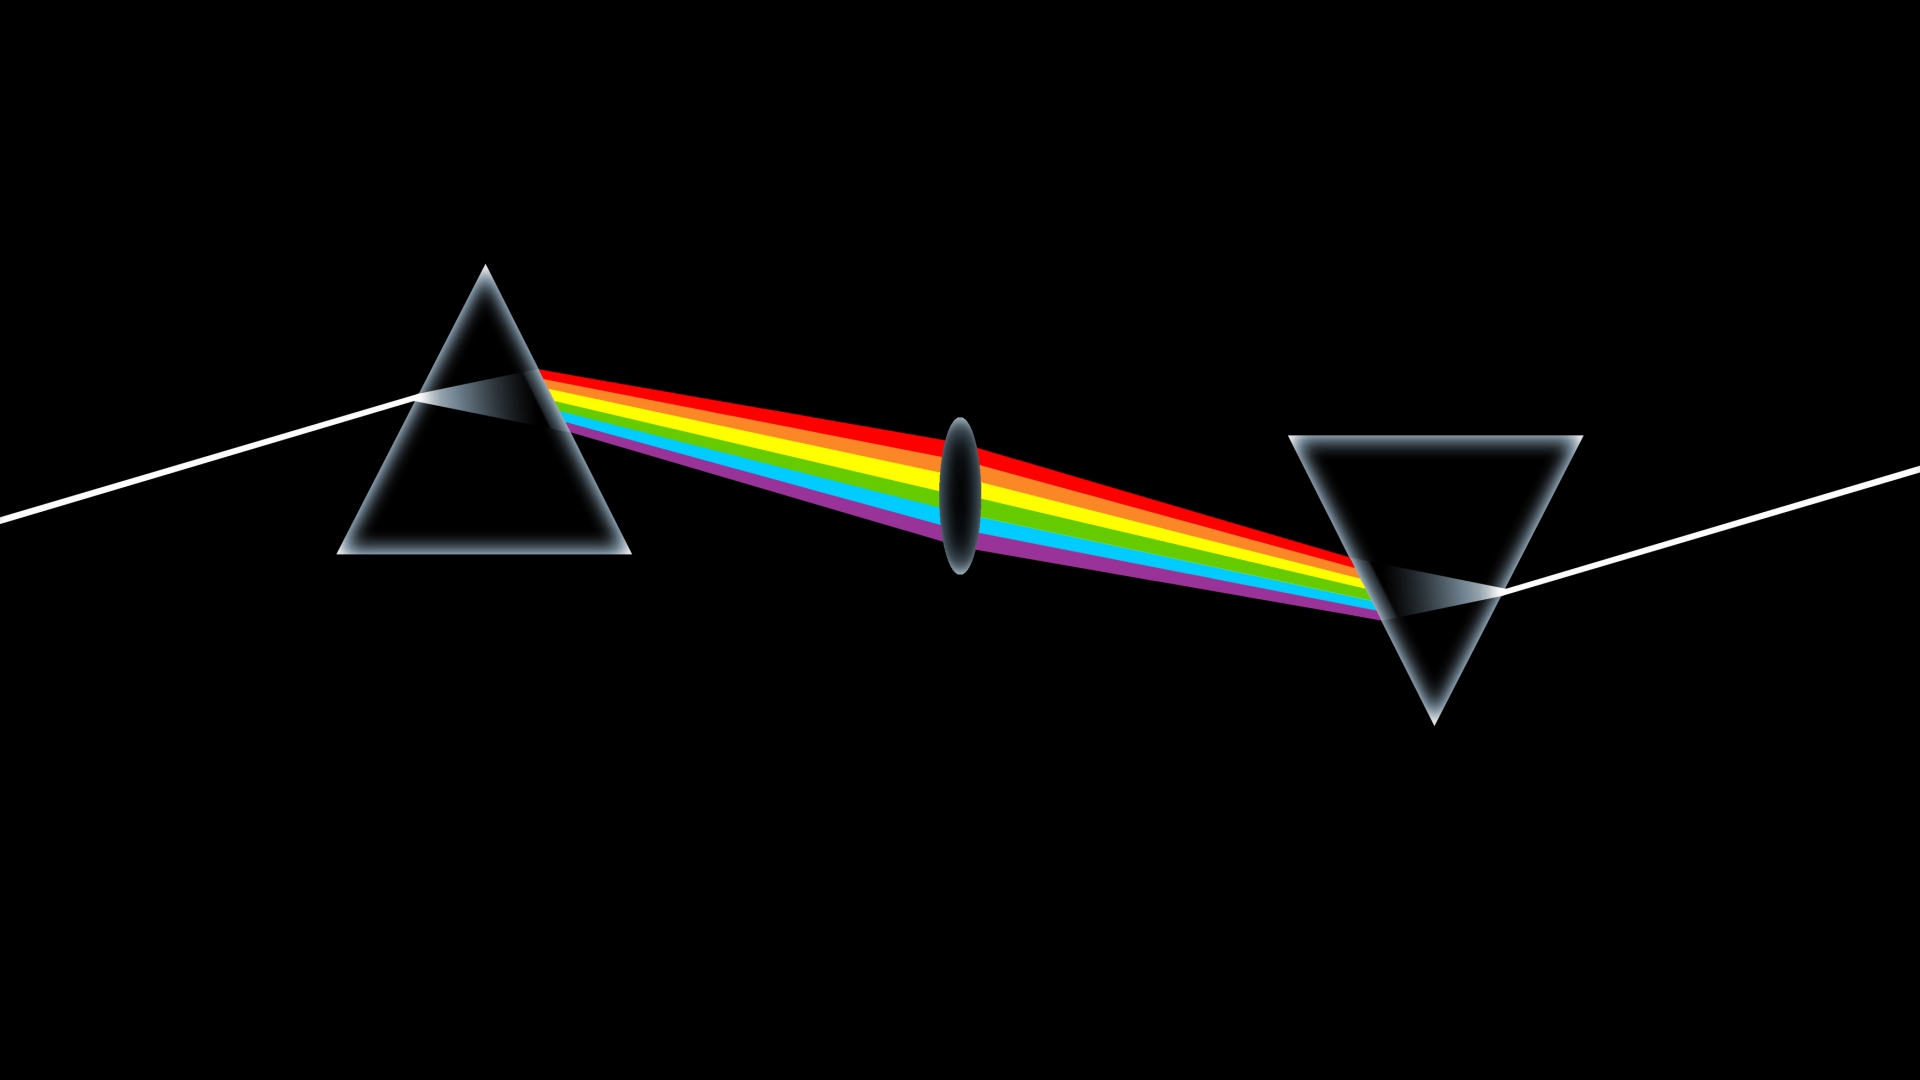 Pink Floyd Hard Rock Classic Retro Bands Groups Album Covers Logo